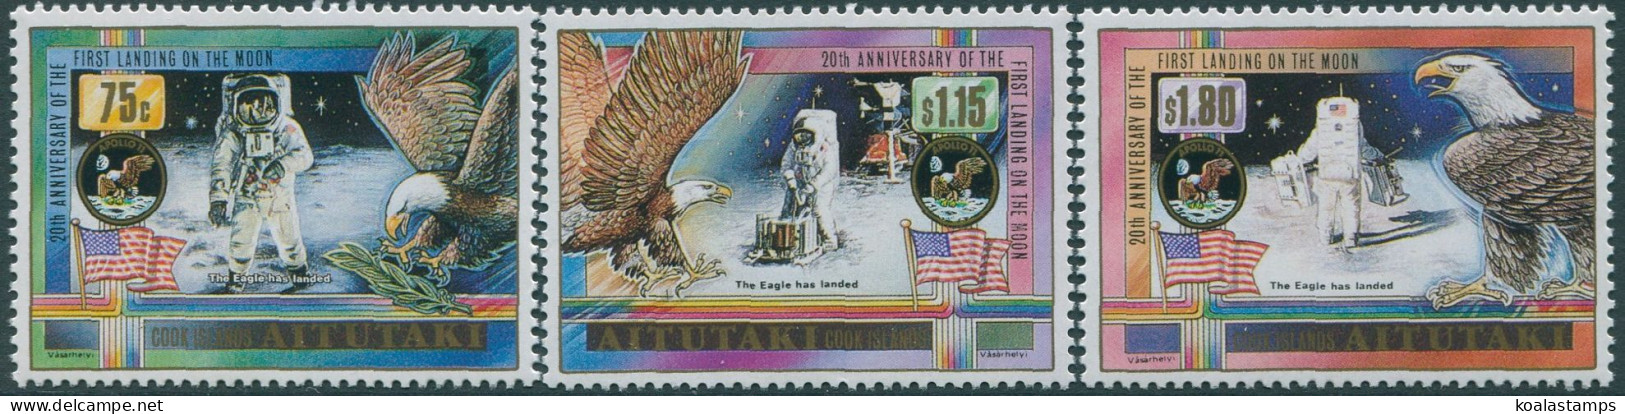 Aitutaki 1989 SG602-604 Moonlanding Set MNH - Cook